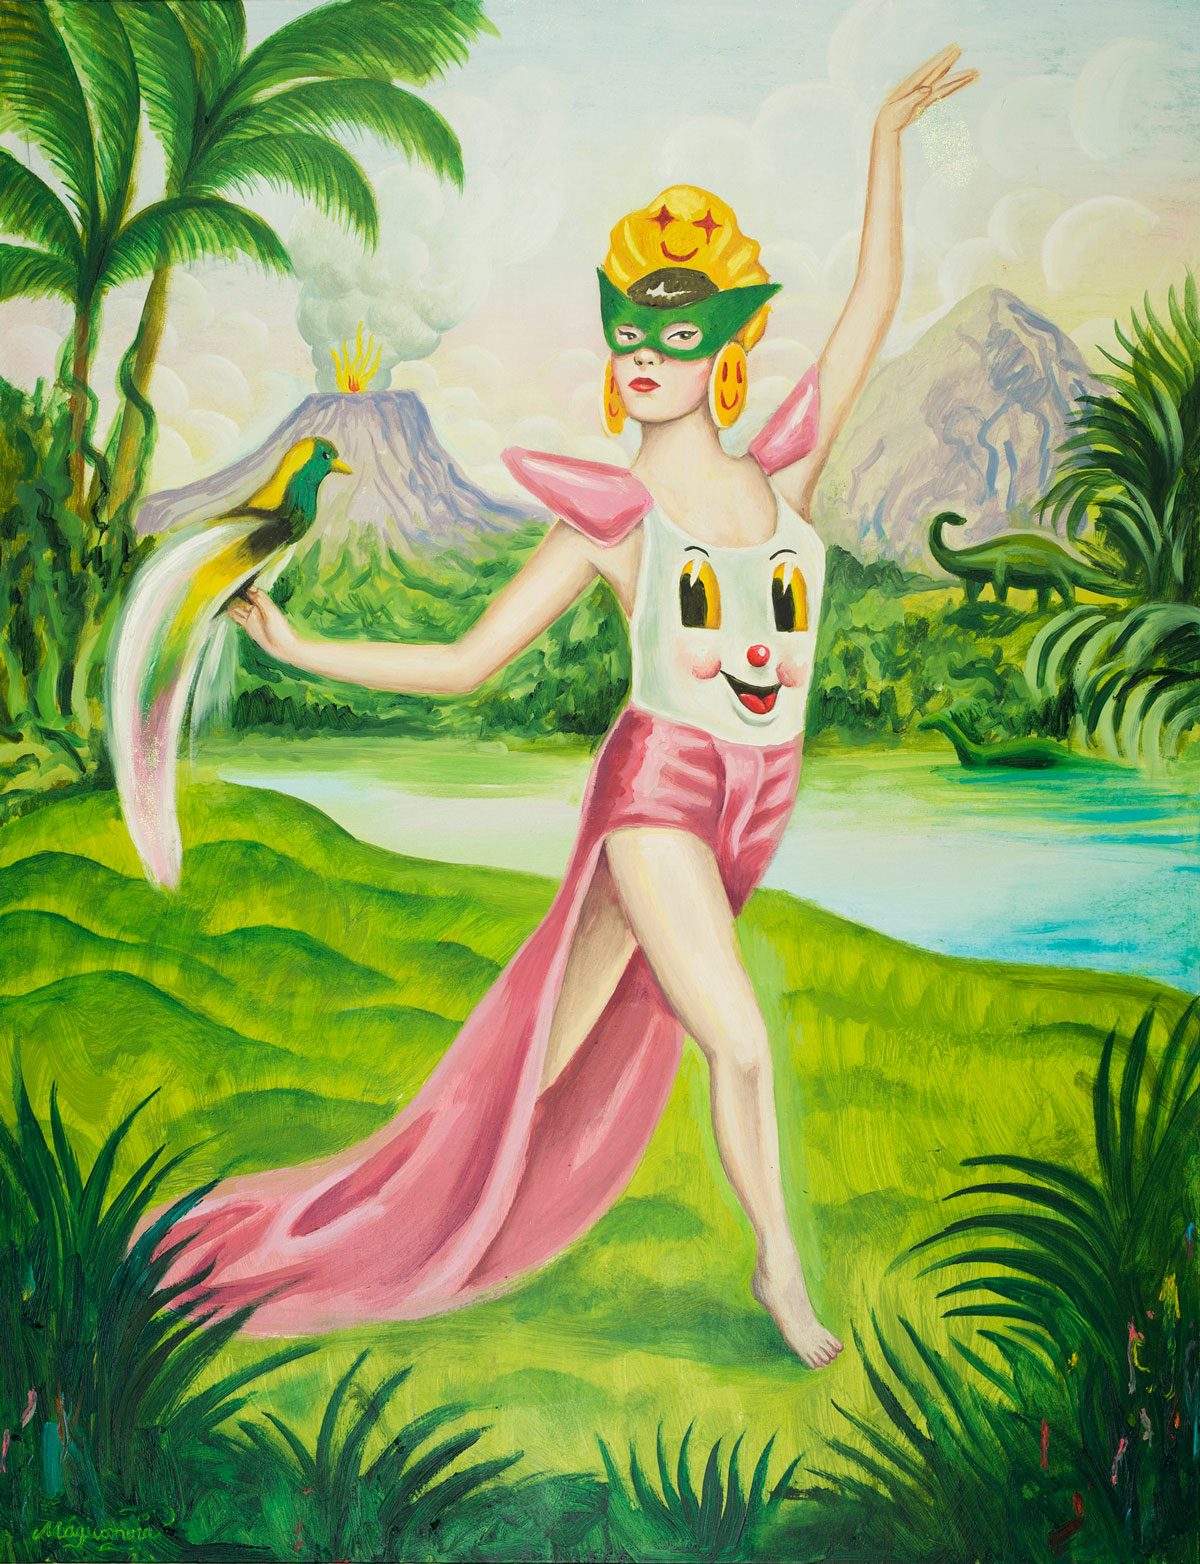 Sergio Mora, Astrogirl in paradise, 2020, oil on canvas, 116x89 cm